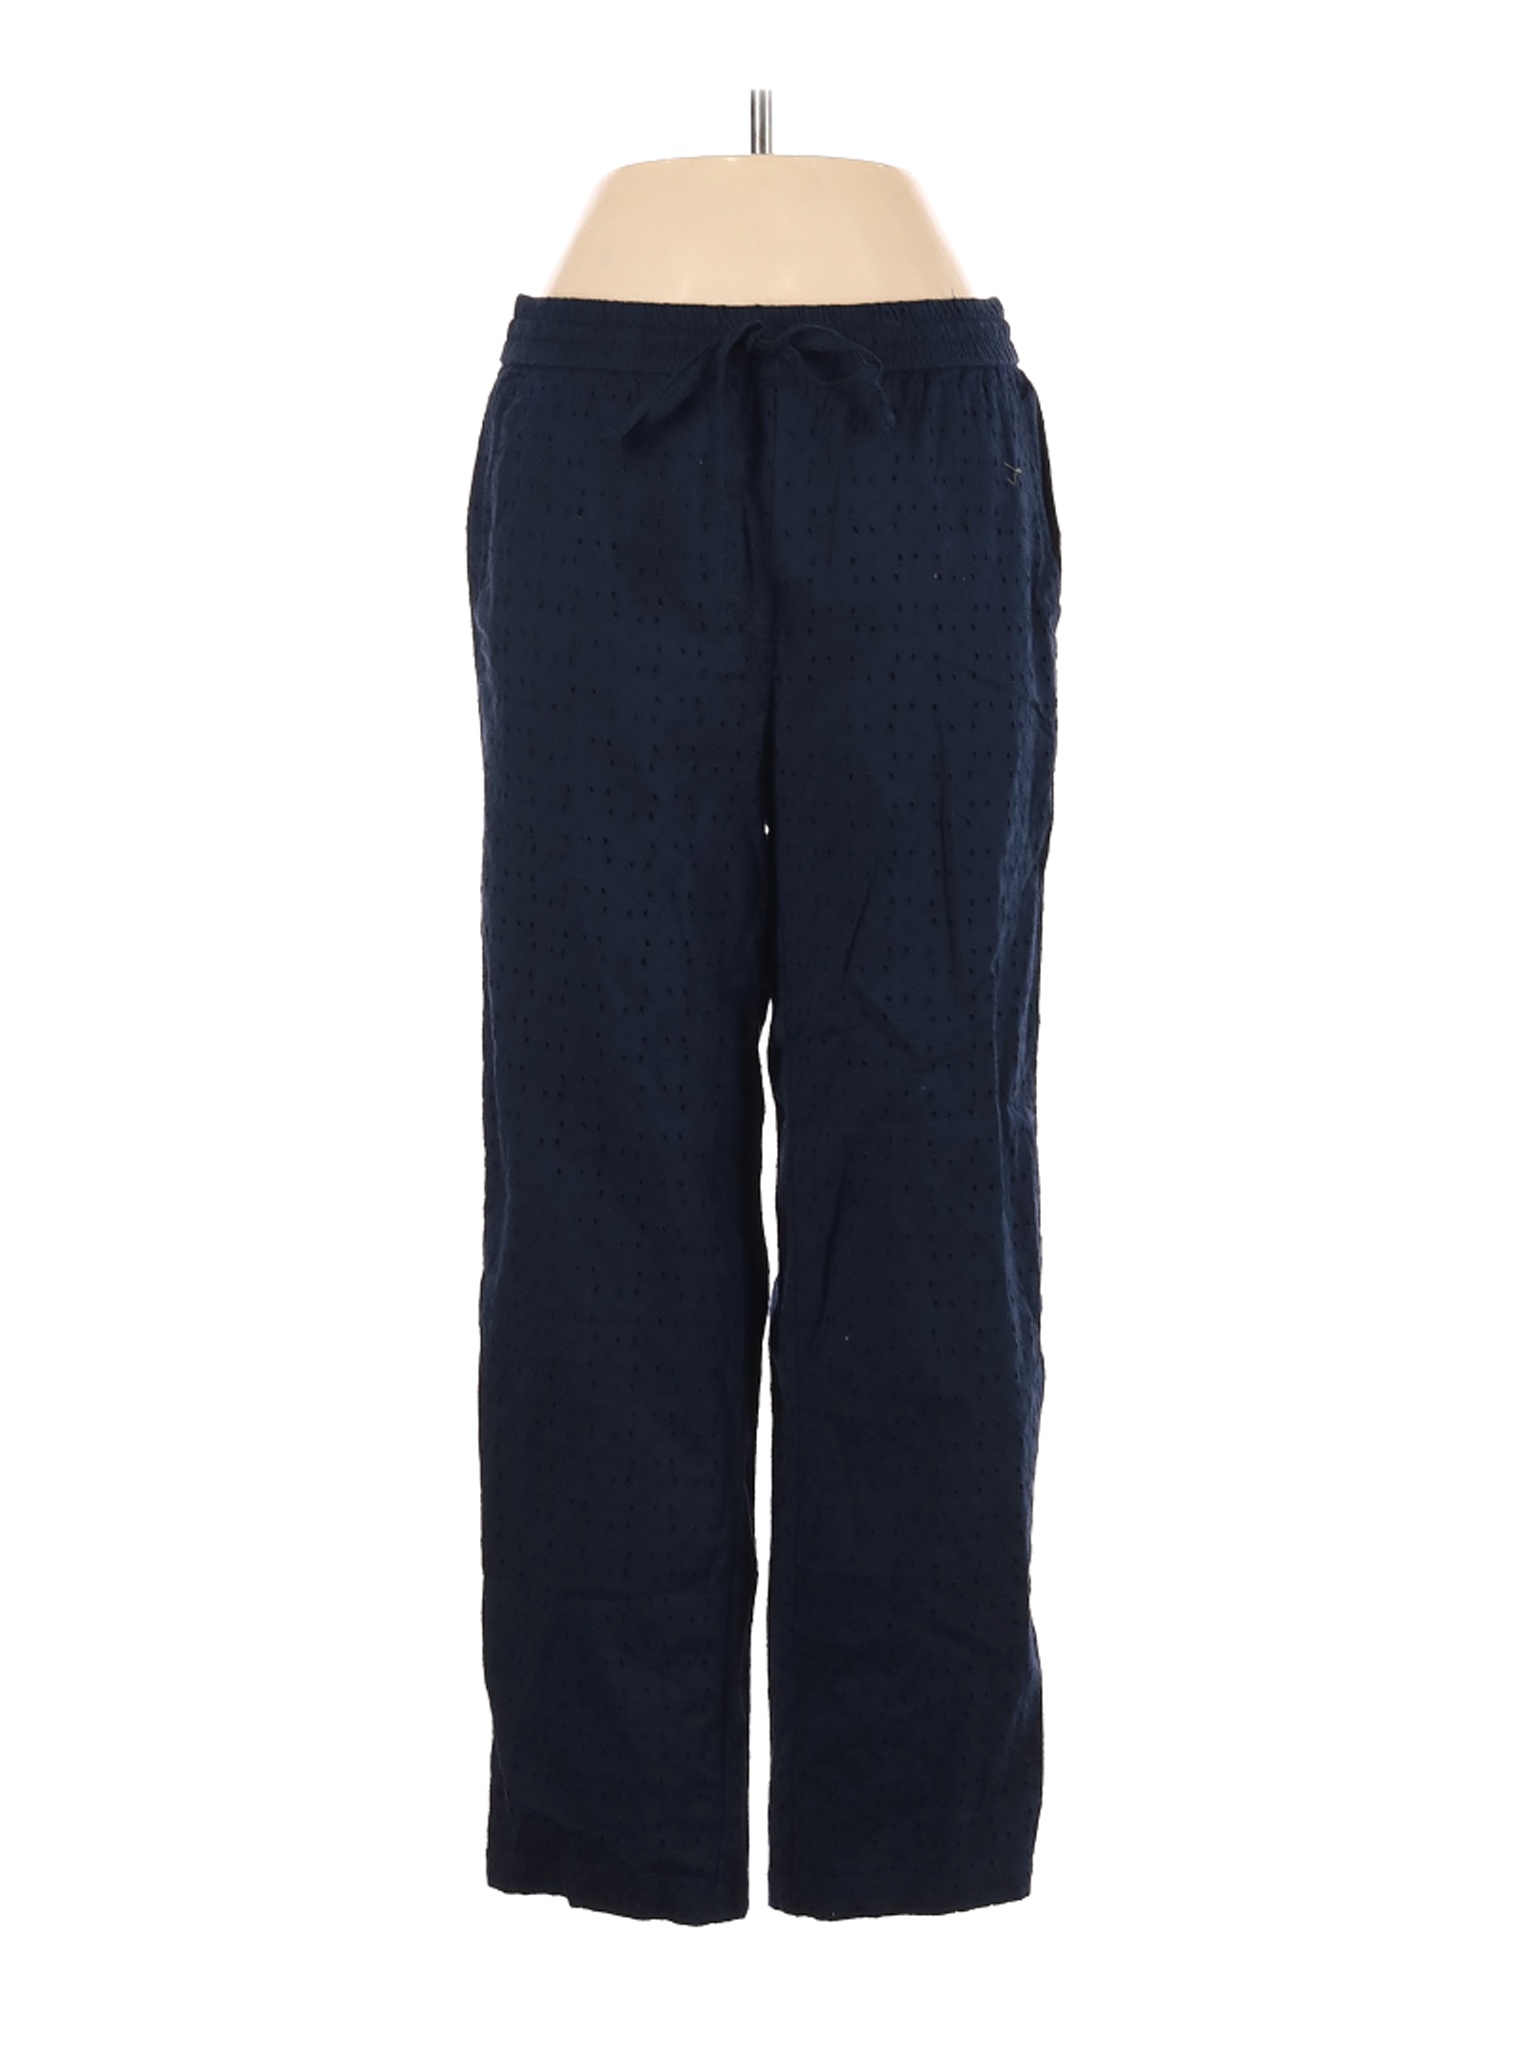 NWT J.Crew Mercantile Women Blue Casual Pants XS | eBay